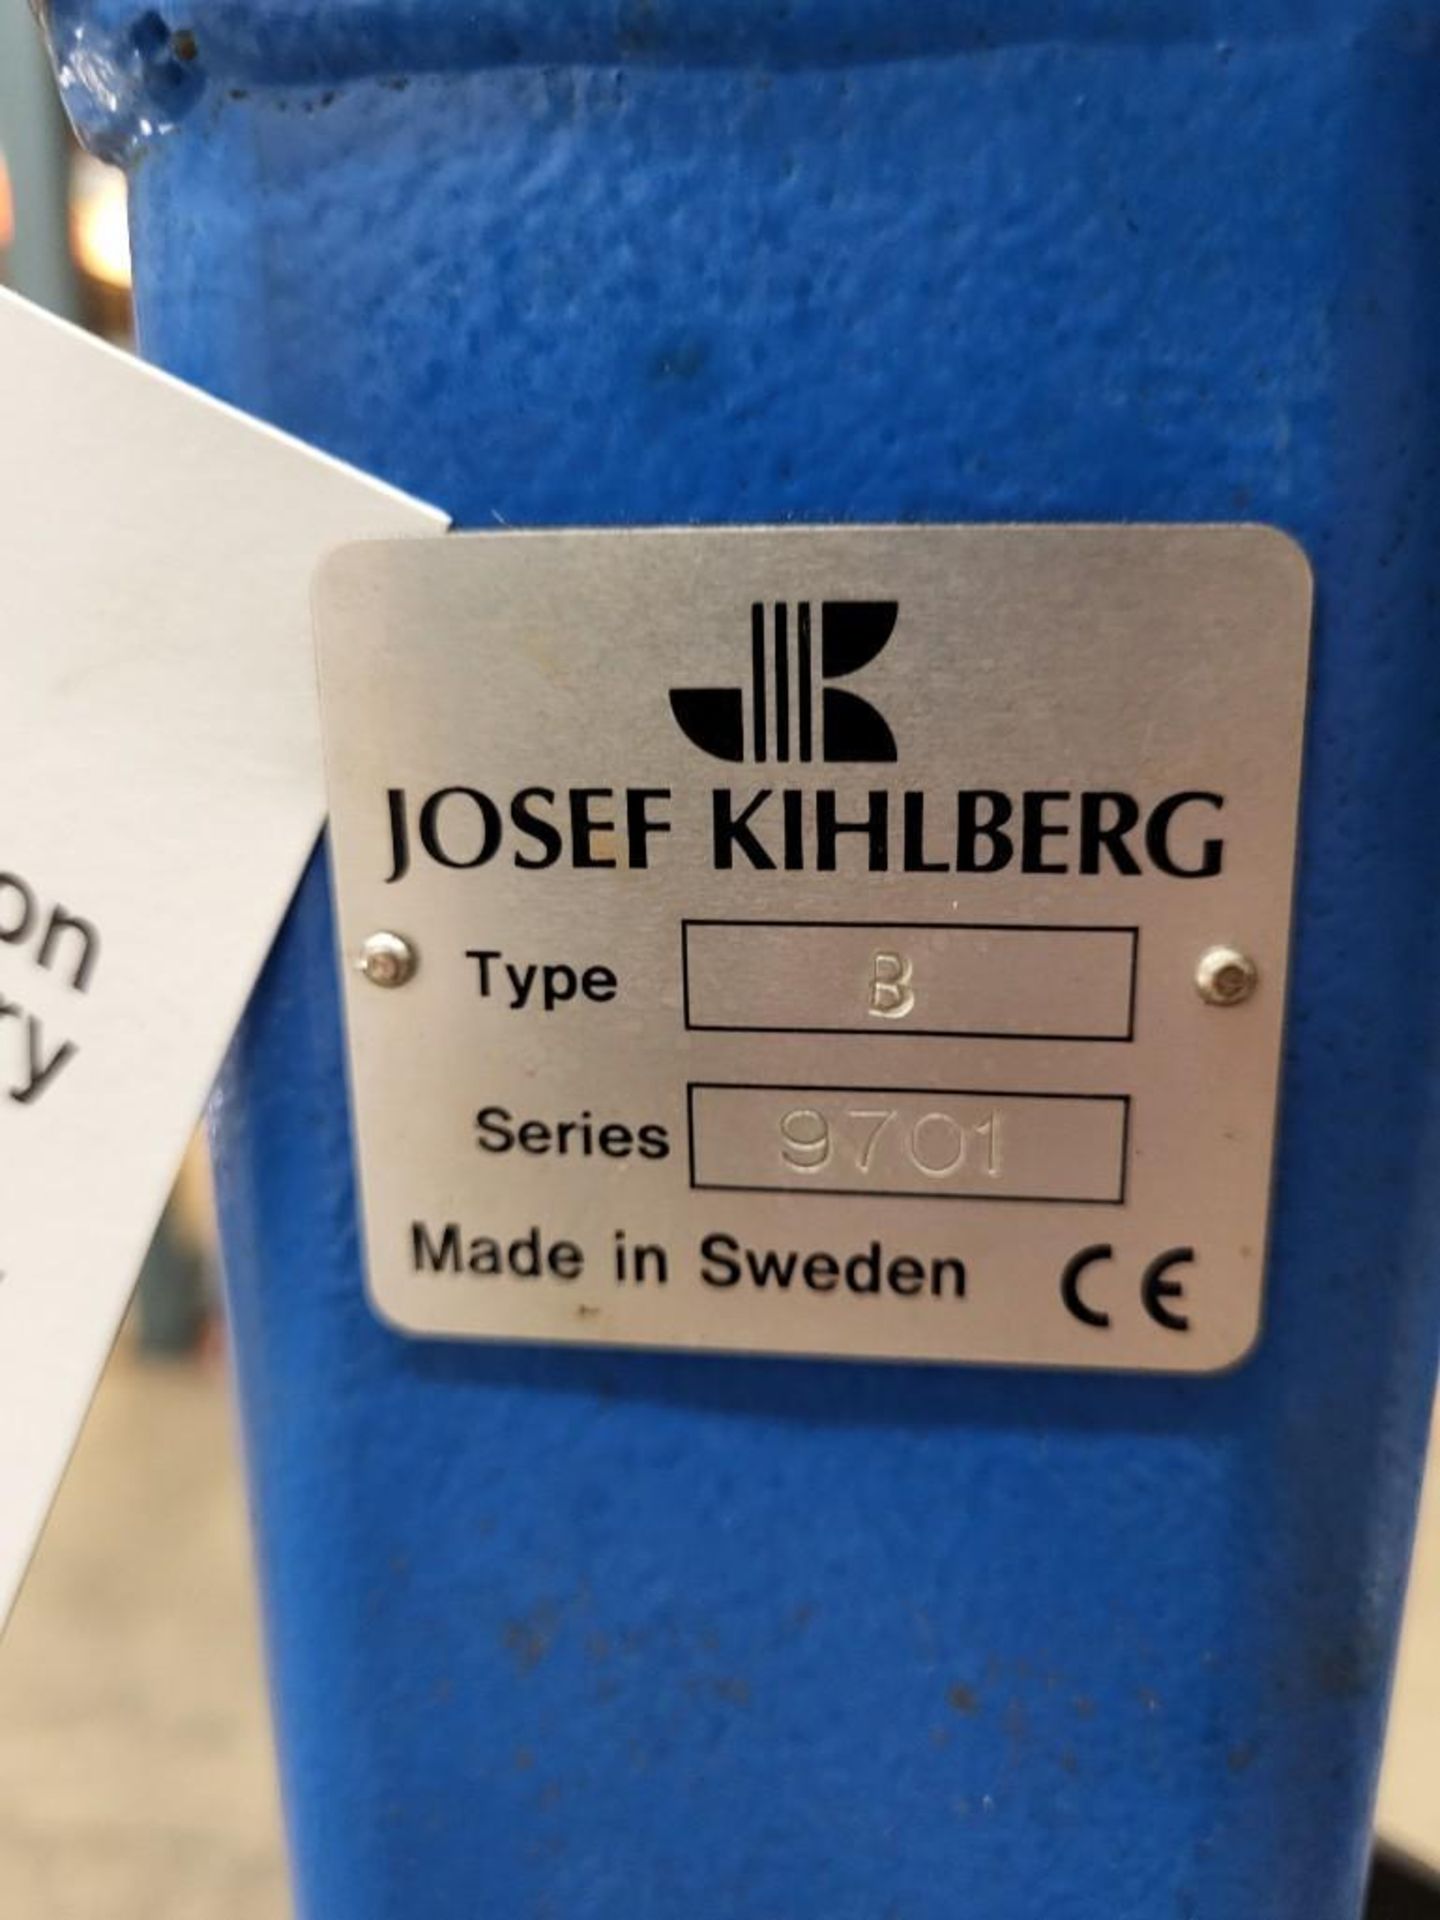 JOSEF KIHLBERG TYPE B SERIES 9701 STAPLER, WITH STAPLES AND HAND STAPLER - Image 7 of 7